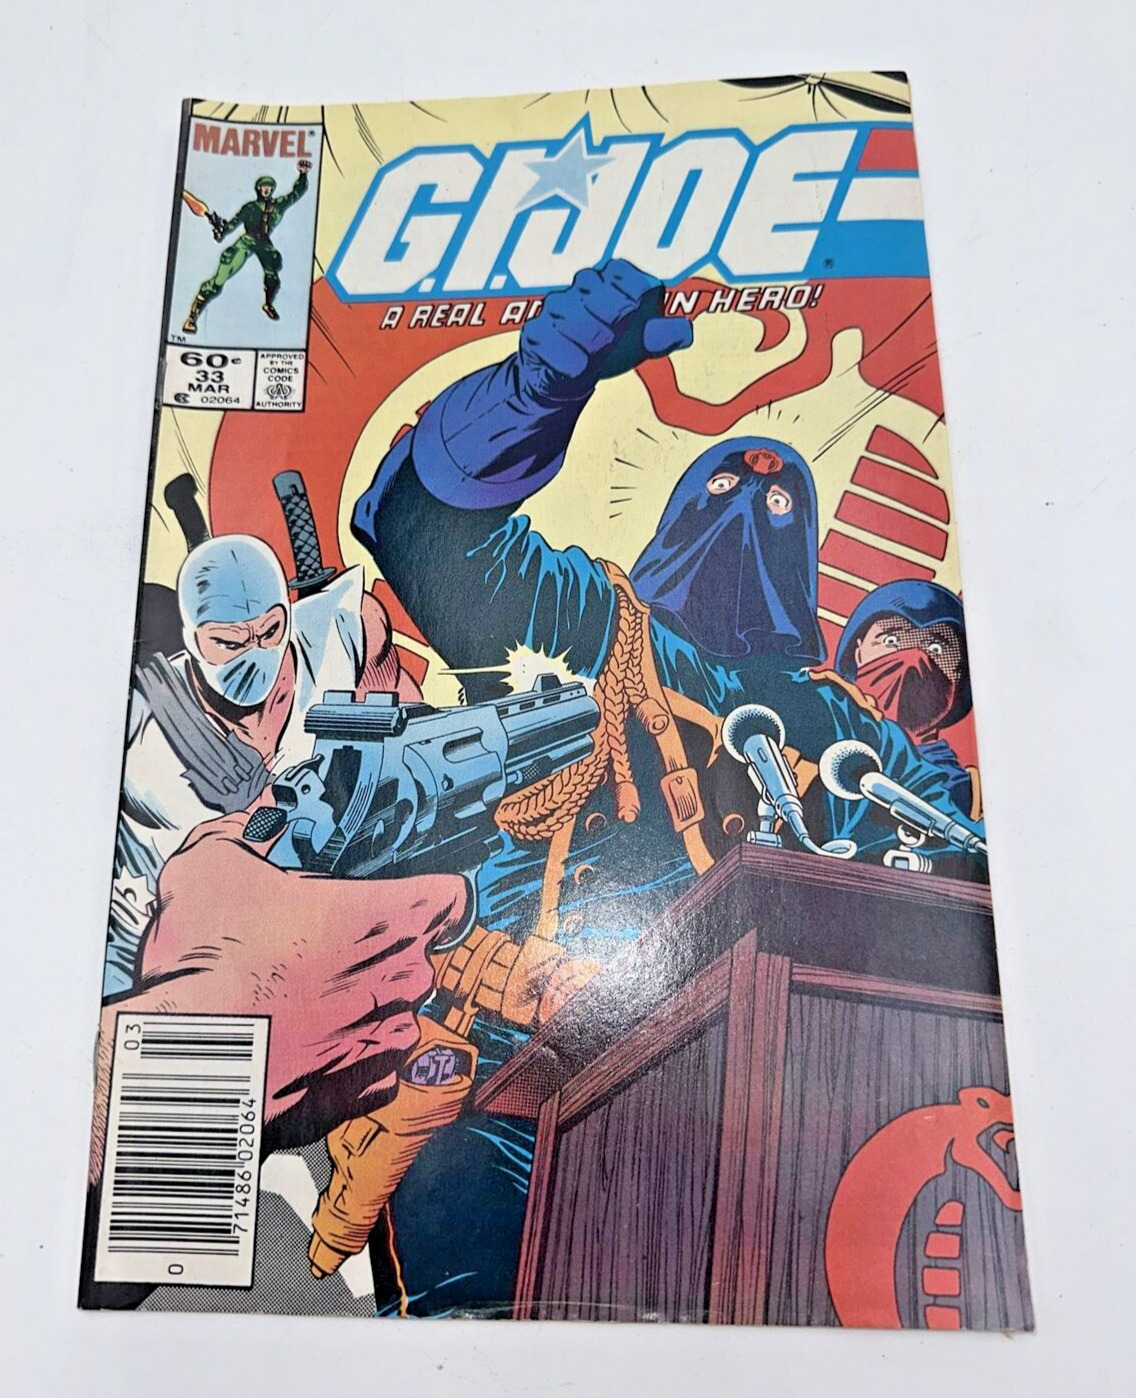 G.I. Joe: A Real American Hero #33 BY MARVEL COMICS